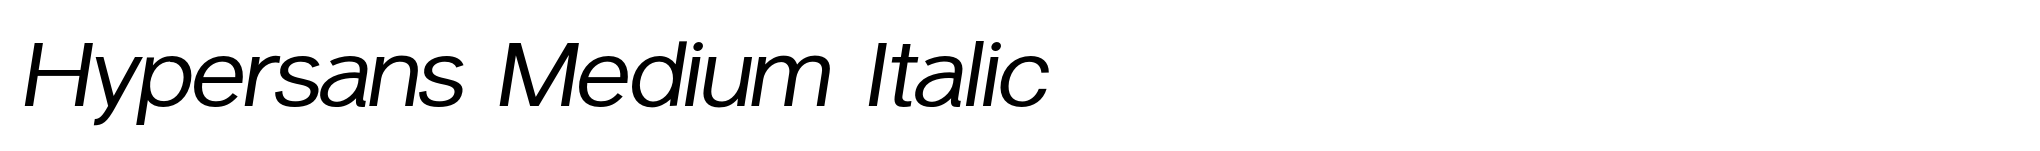 Hypersans Medium Italic image